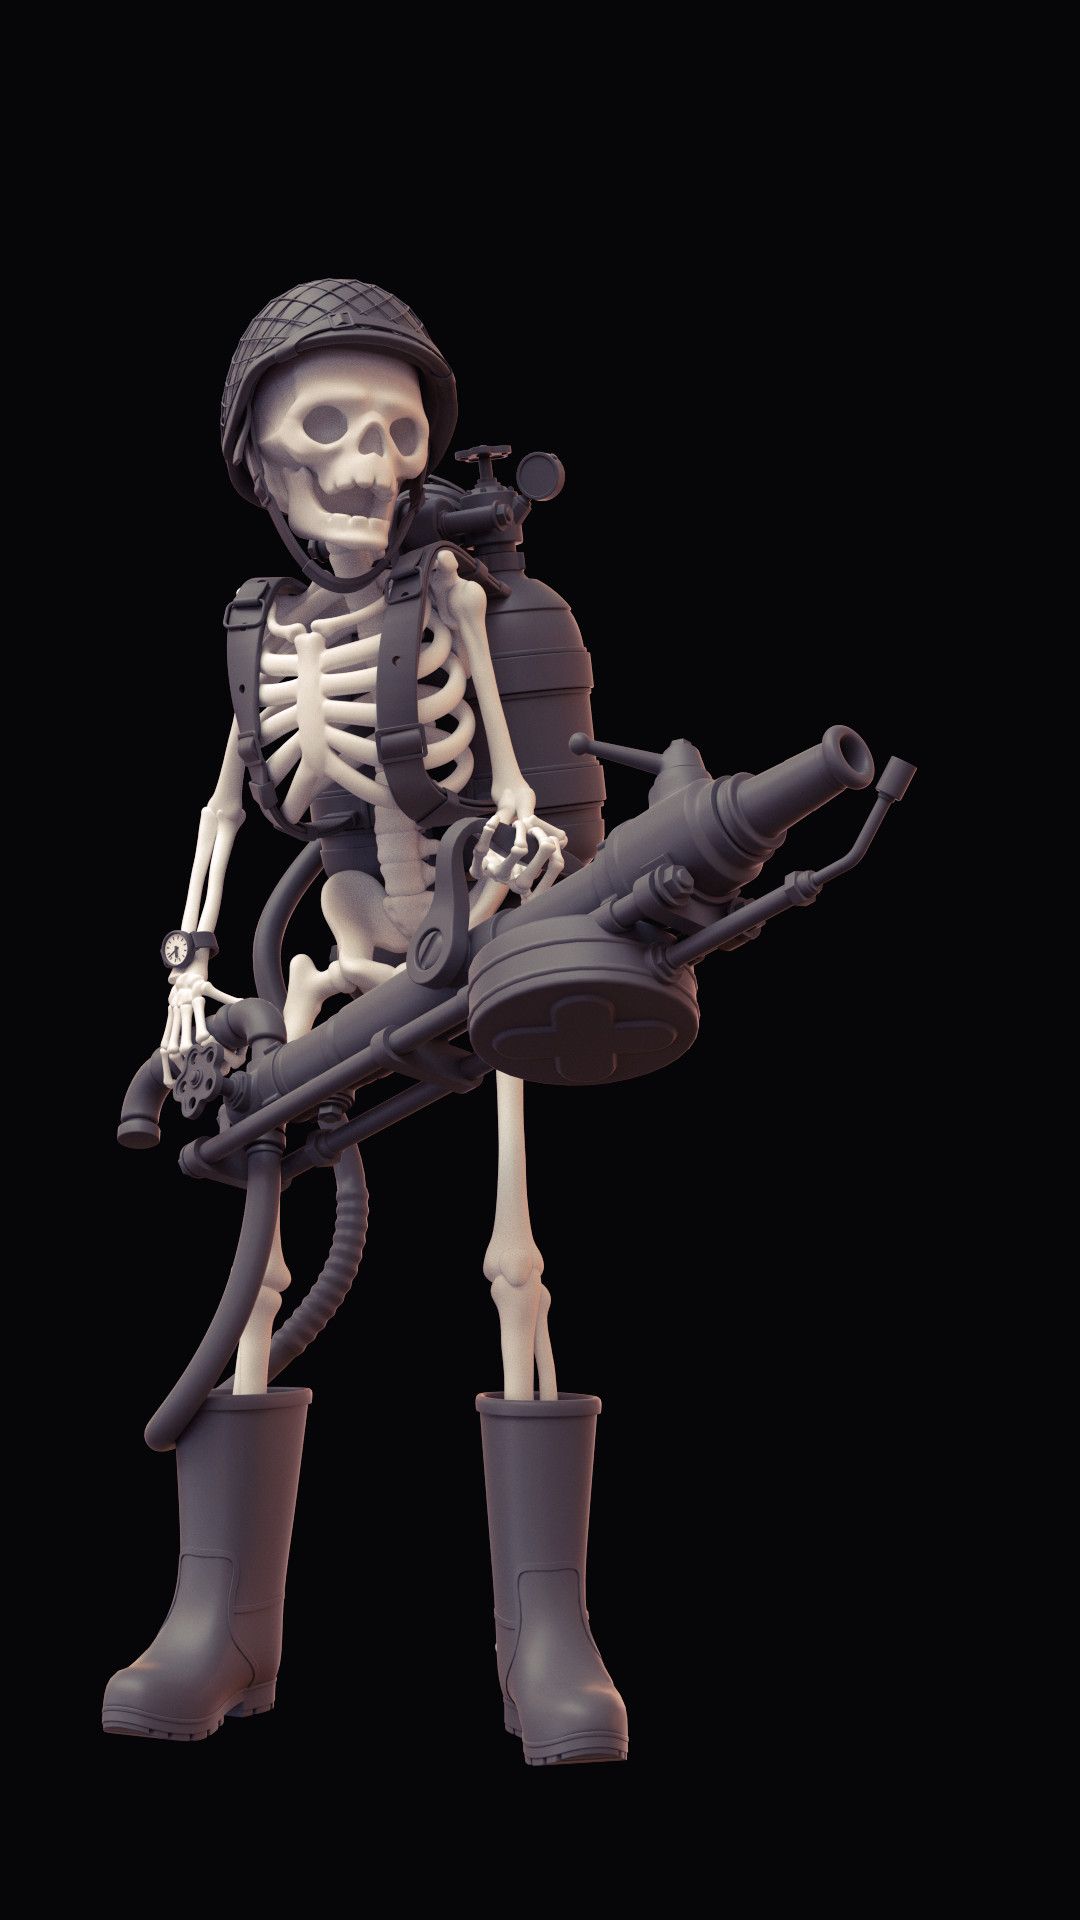 Skeleton wallpaper for Android